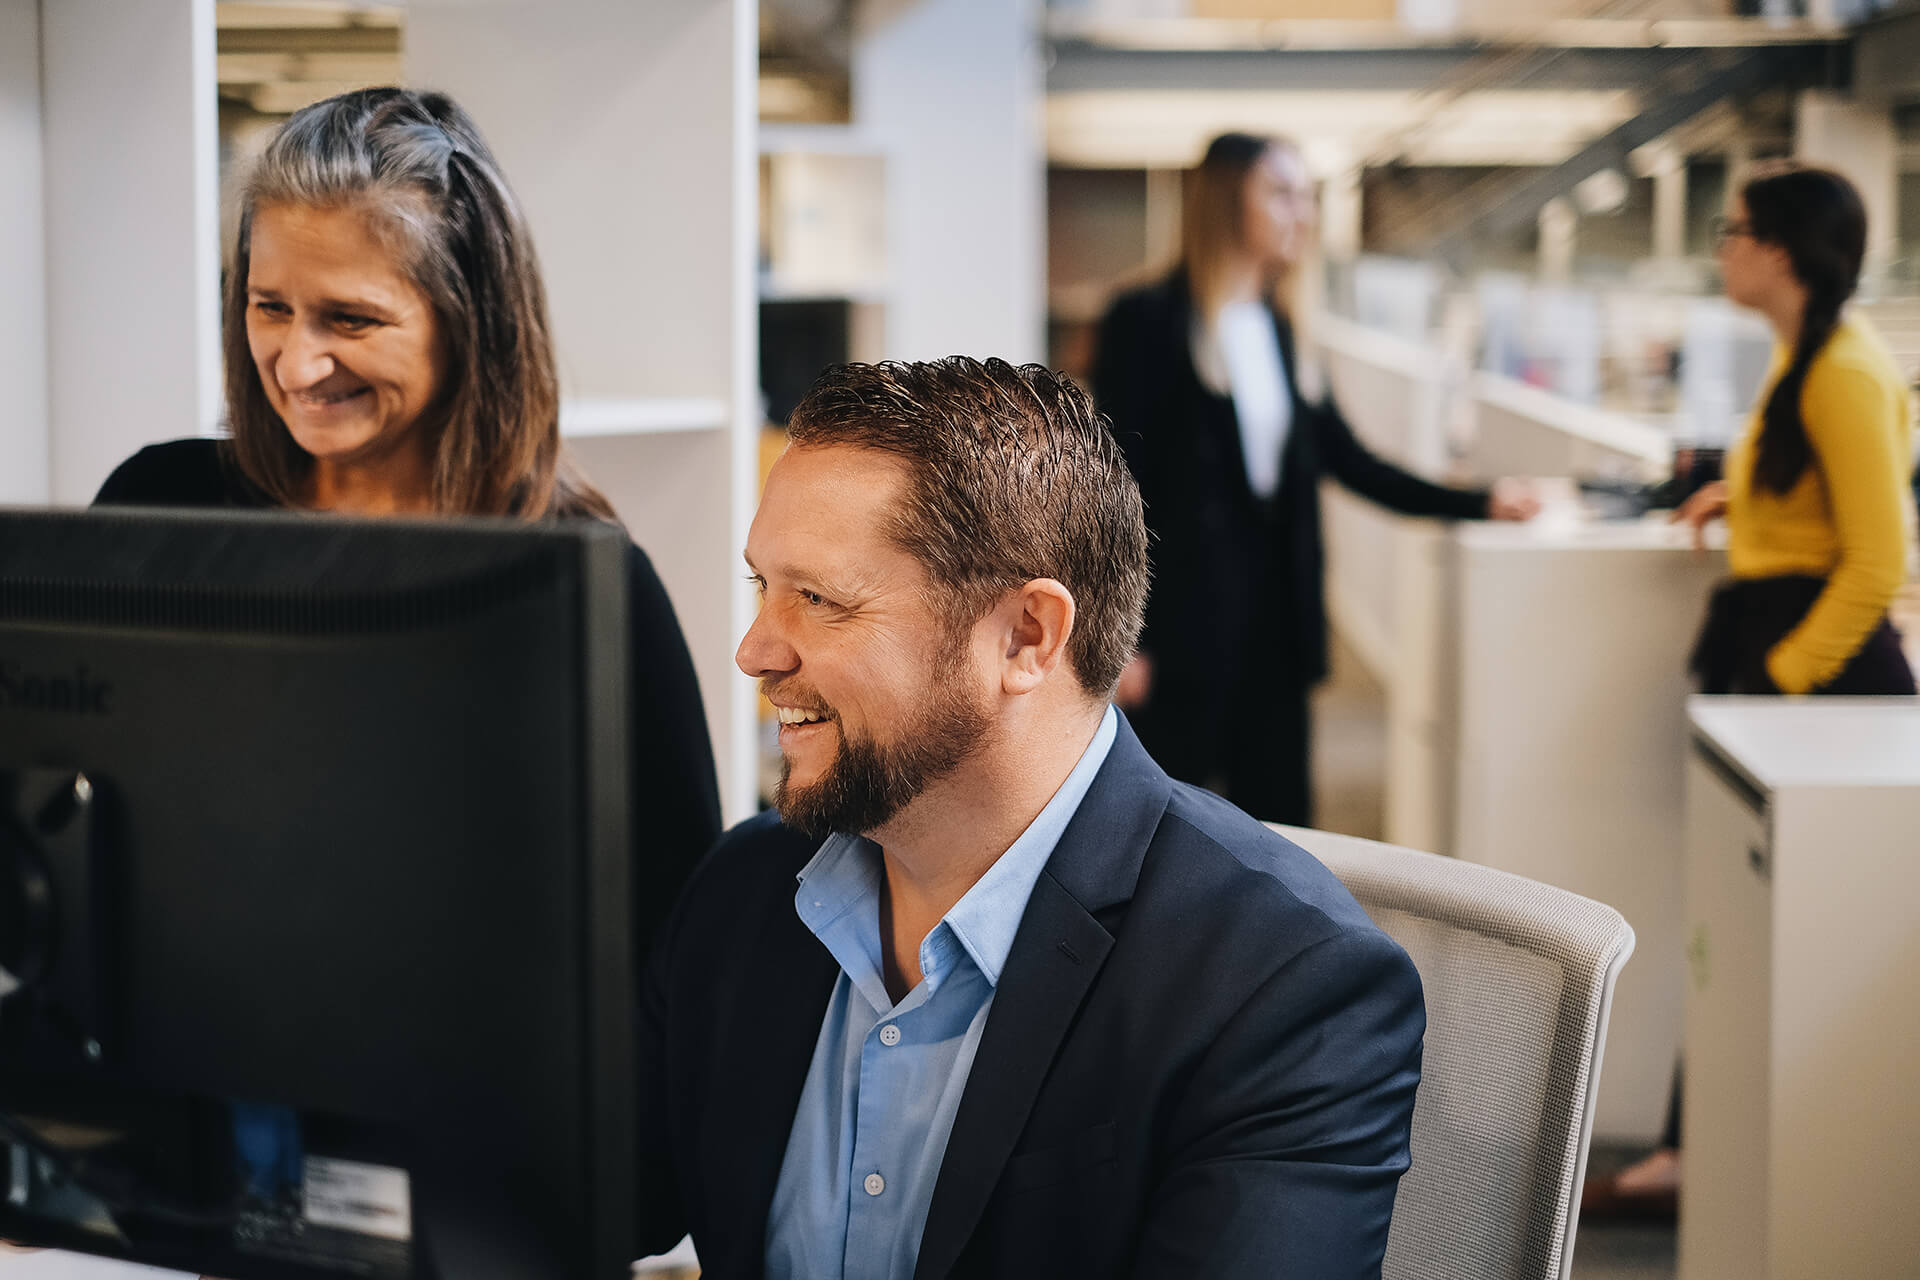 Smiling Man And Woman Looking At Computer